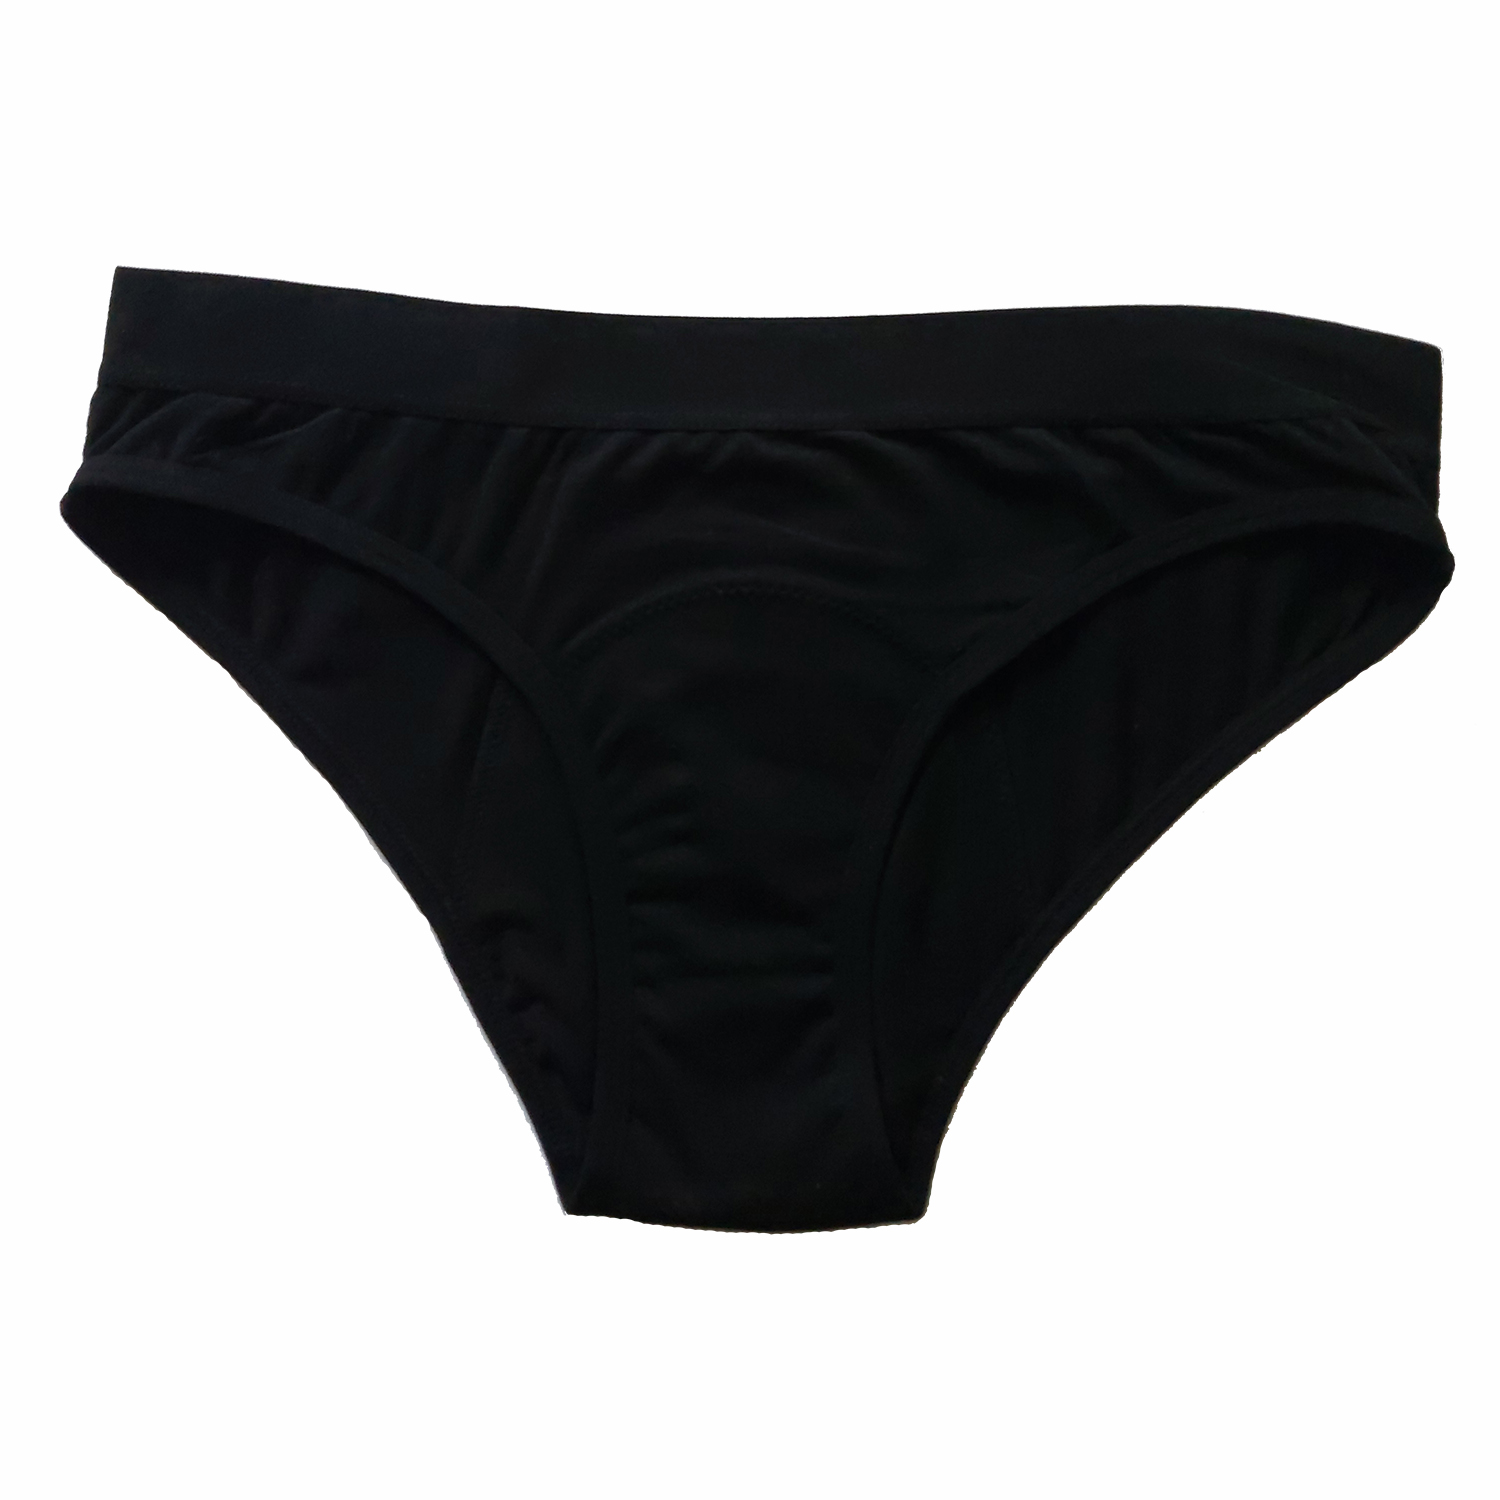 Classic Bikini Cotton Period Underwear | Confidence Period Panties